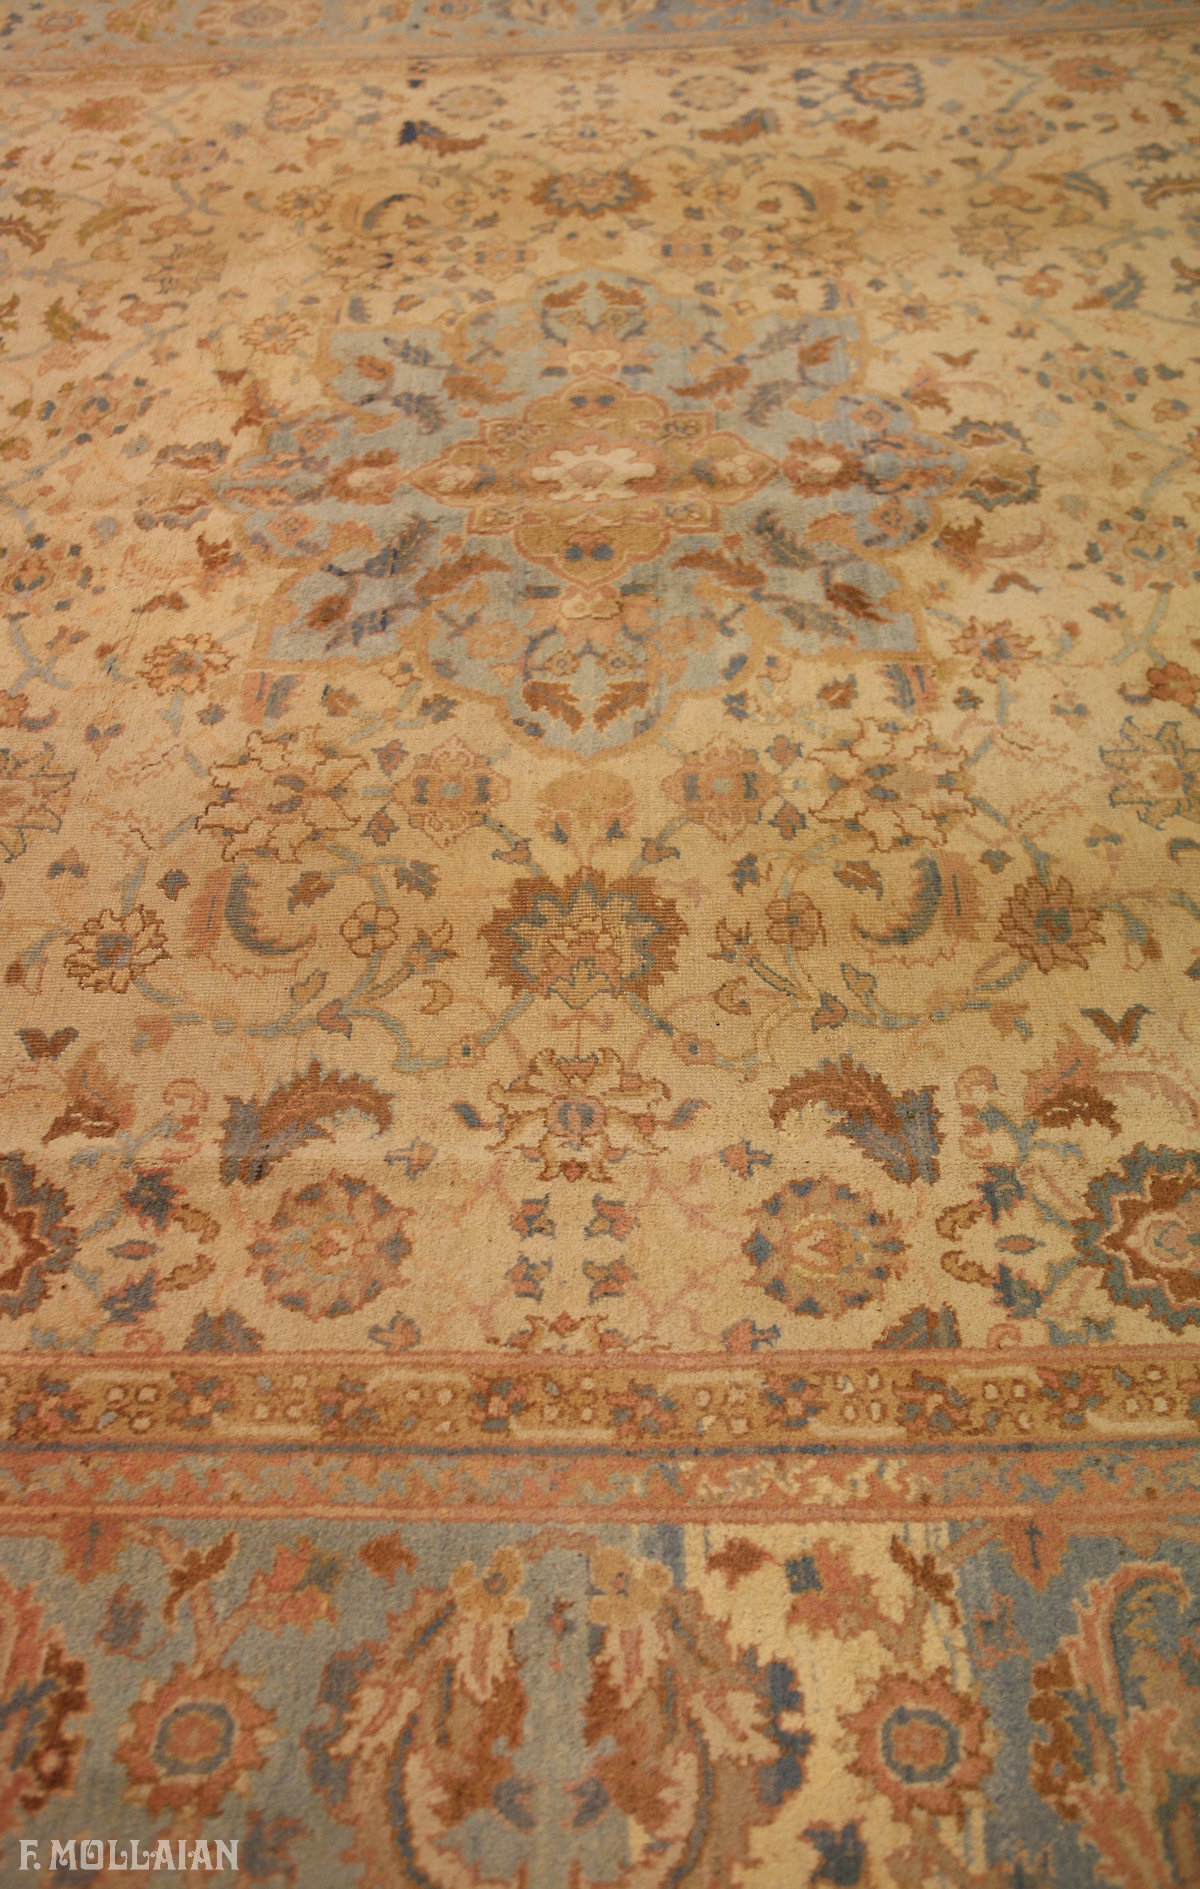 Antique Indian Amirstar Carpet n°:61385481